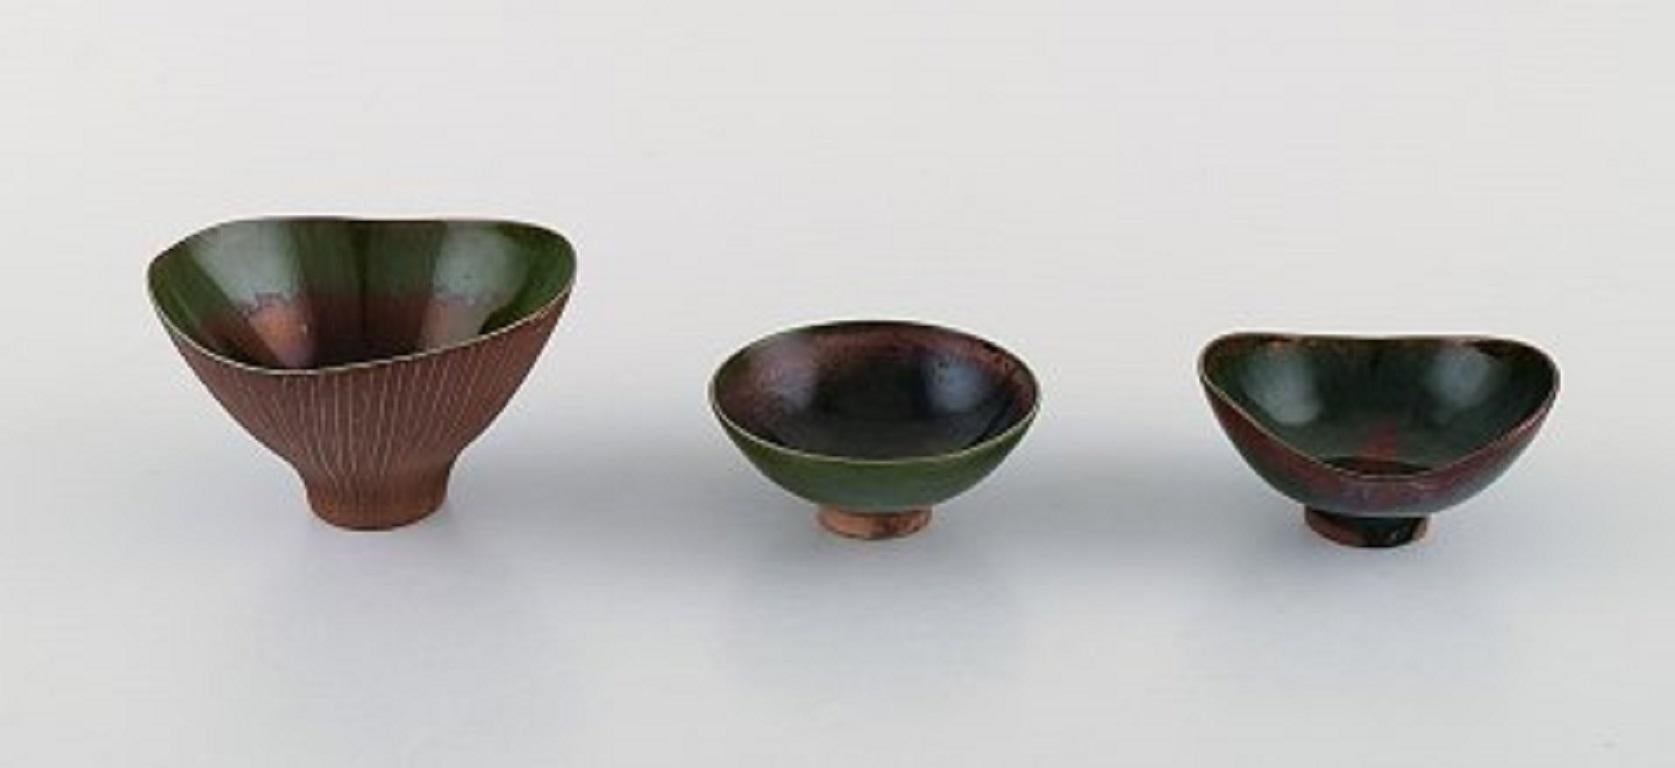 Sven Hofverberg (1923-1998) Swedish ceramist. Three unique bowls in glazed ceramics. Beautiful metallic glaze, 1980s.
Largest measures: 8 x 5 cm.
In very good condition.
Signed.